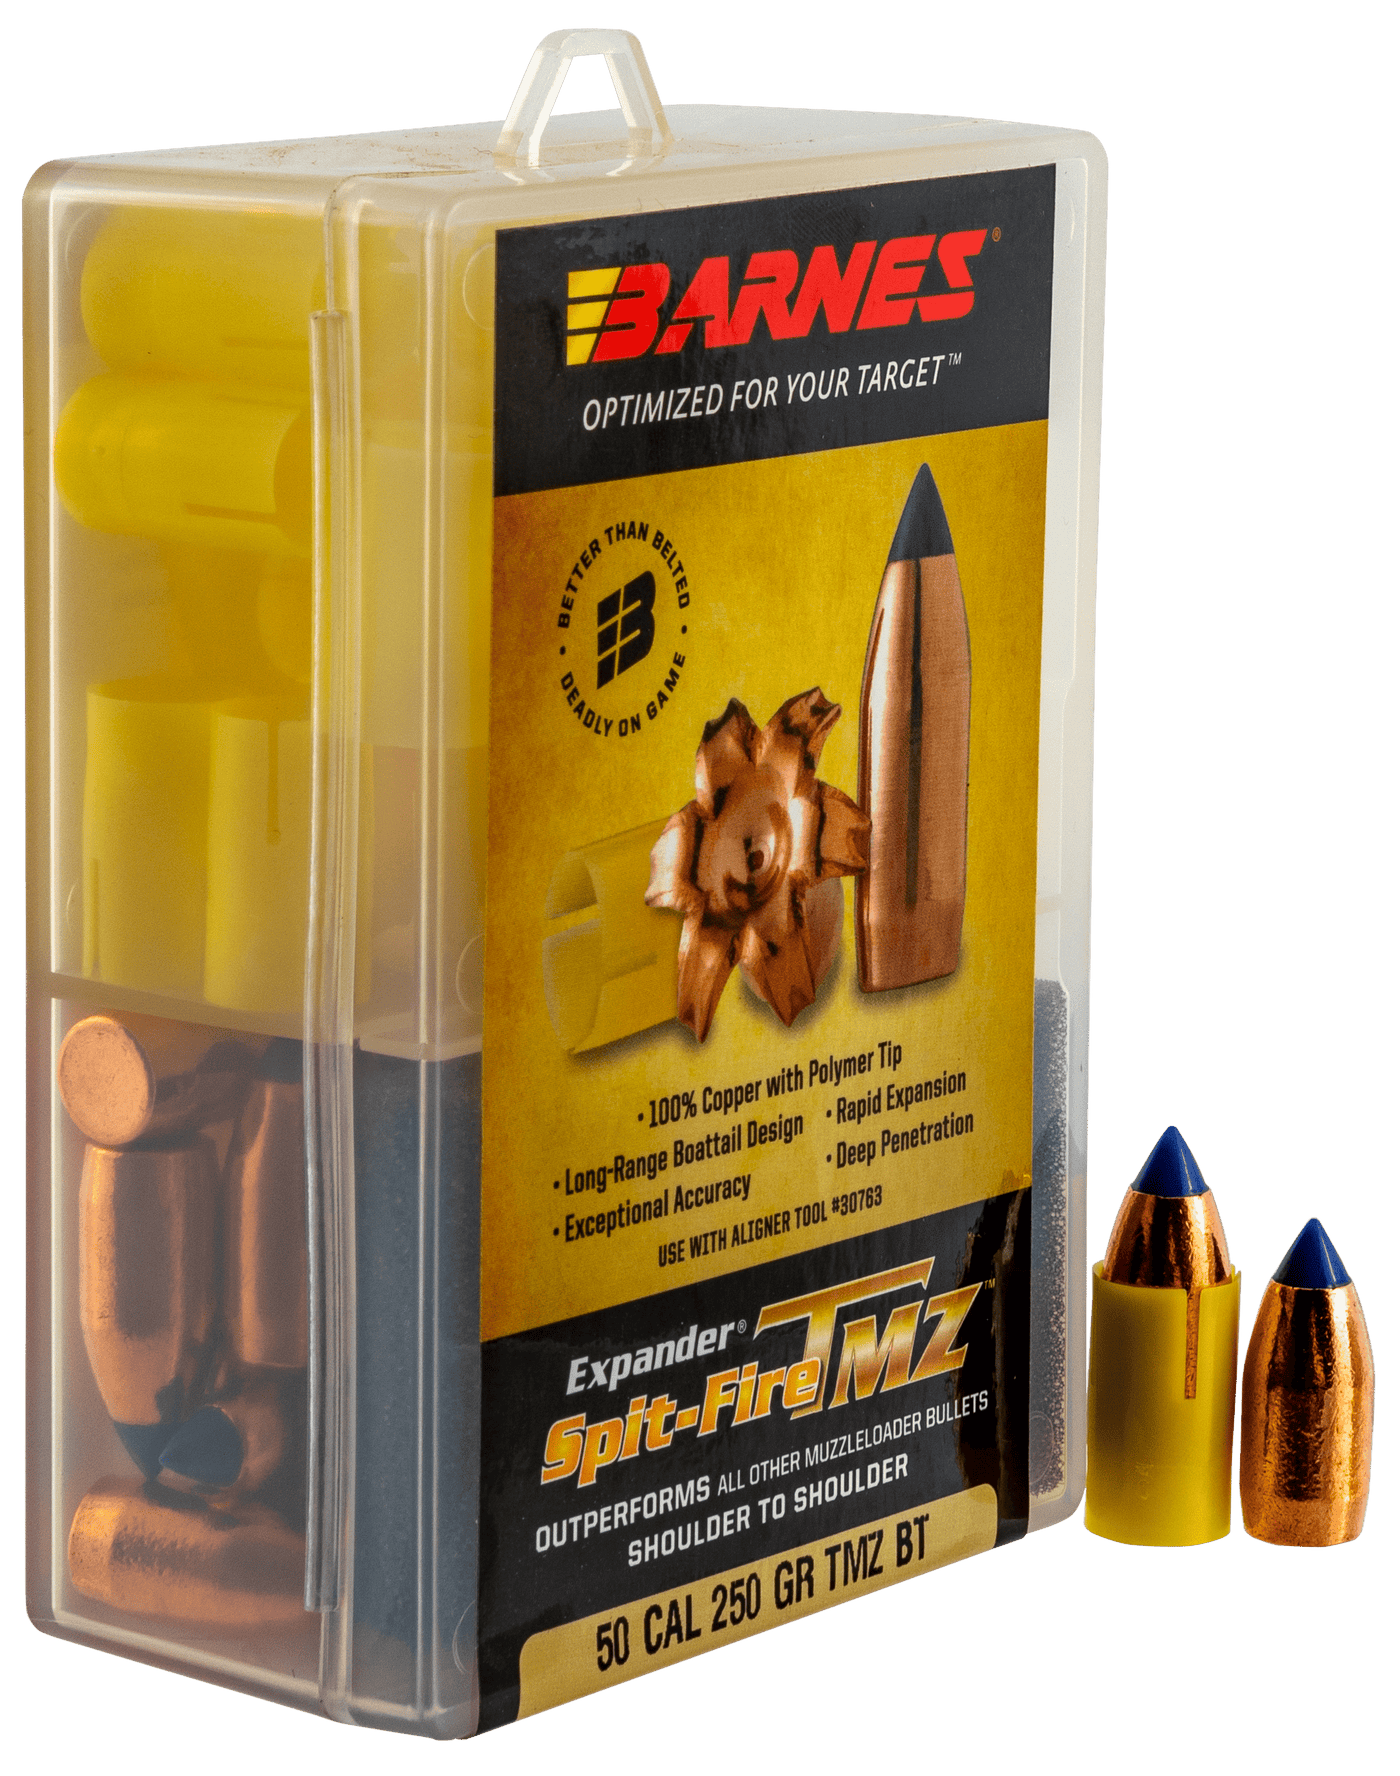 Barnes Bullets Barnes Bullets Spit-fire Tmz, Brns 30598 Sptfr 50c 250 Tmz        24 Muzzleloading